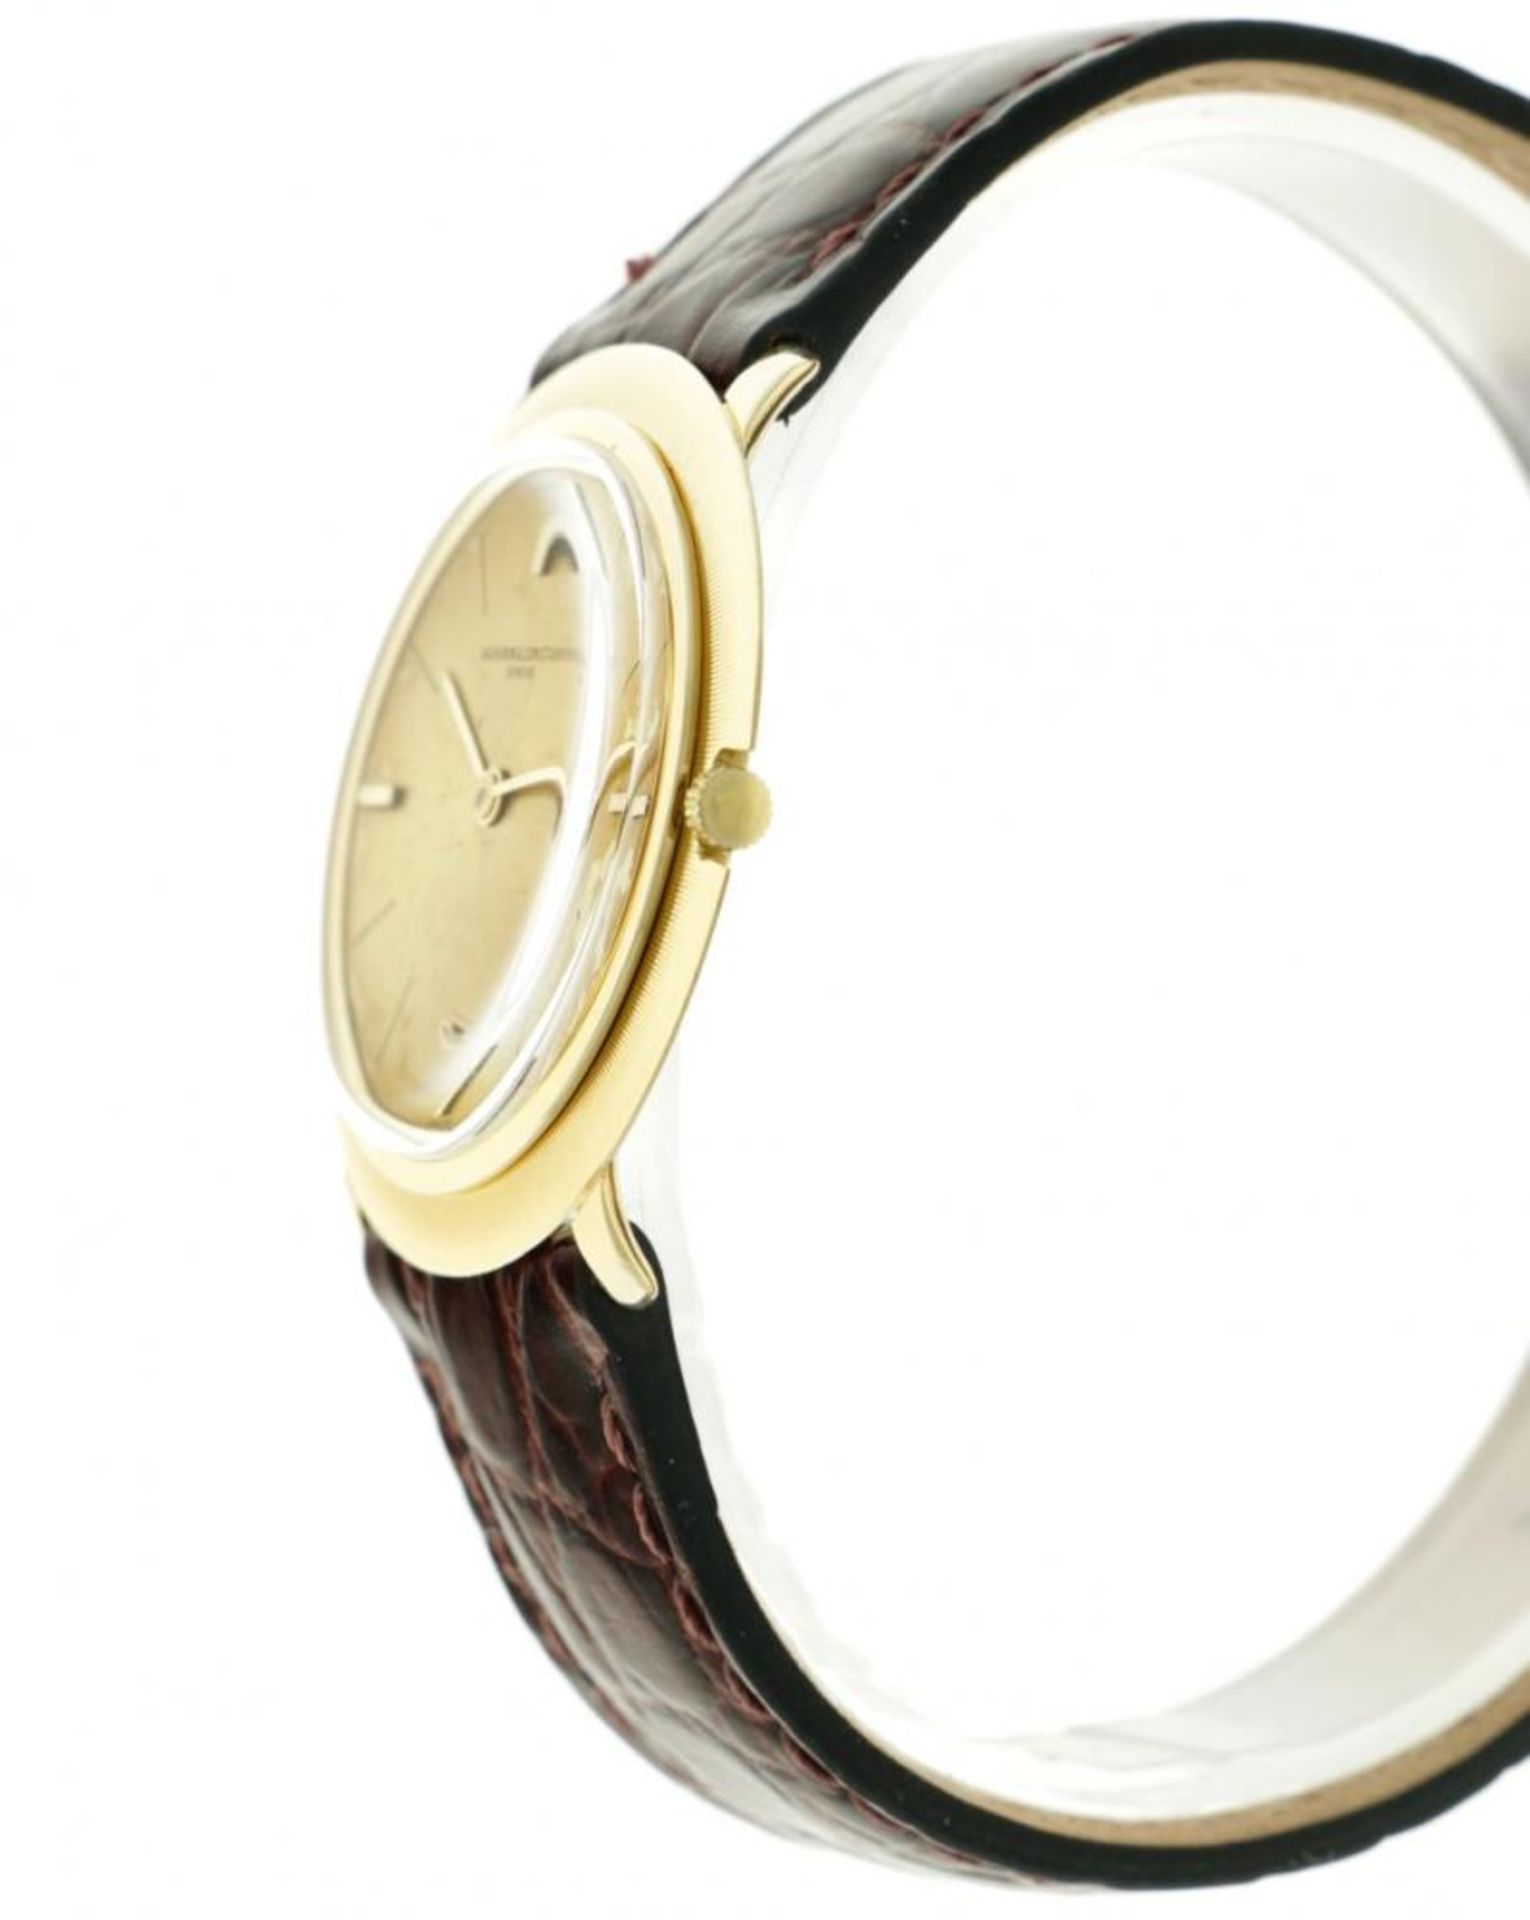 Vacheron & Constantin 6335 - Men's watch - apprx. 1960. - Image 5 of 7